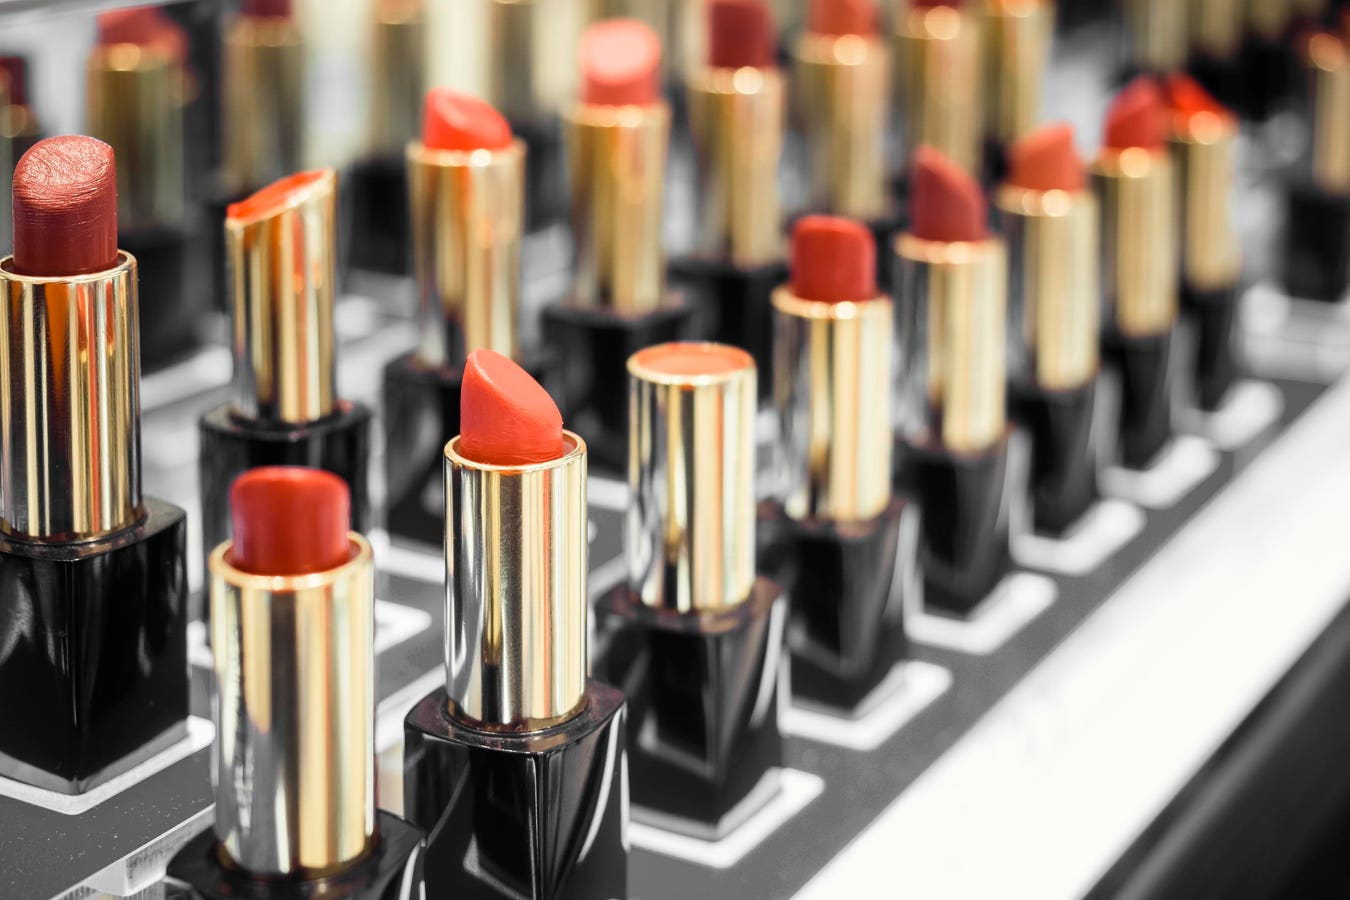 Online Shoppers Splurging On Cosmetics, Driving $16 Billion In Sales